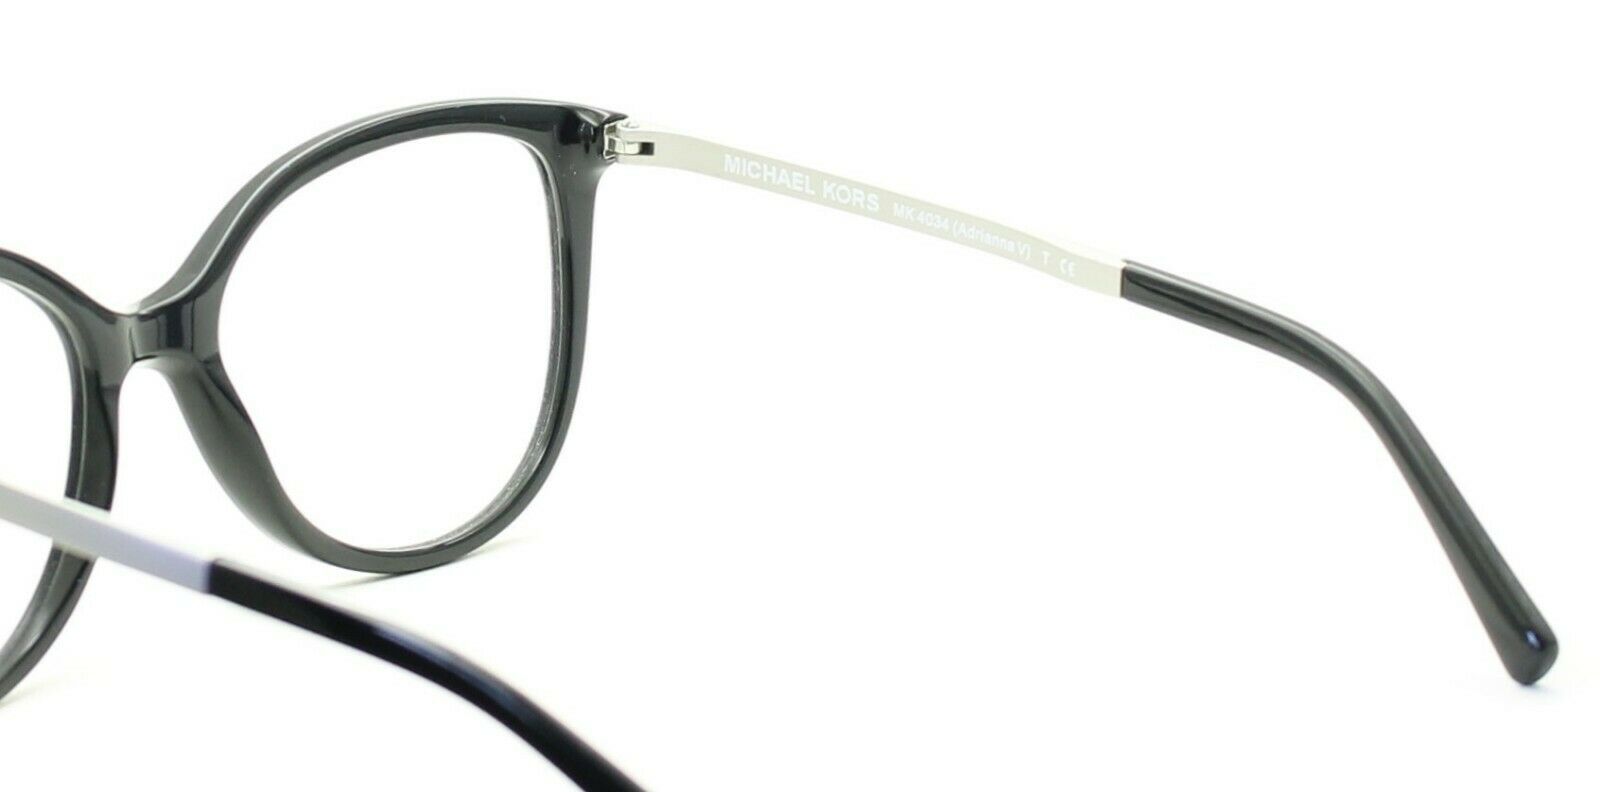 MICHAEL KORS MK 4034 3204 52mm Adrianna V Eyewear FRAMES RX Optical Glasses -New